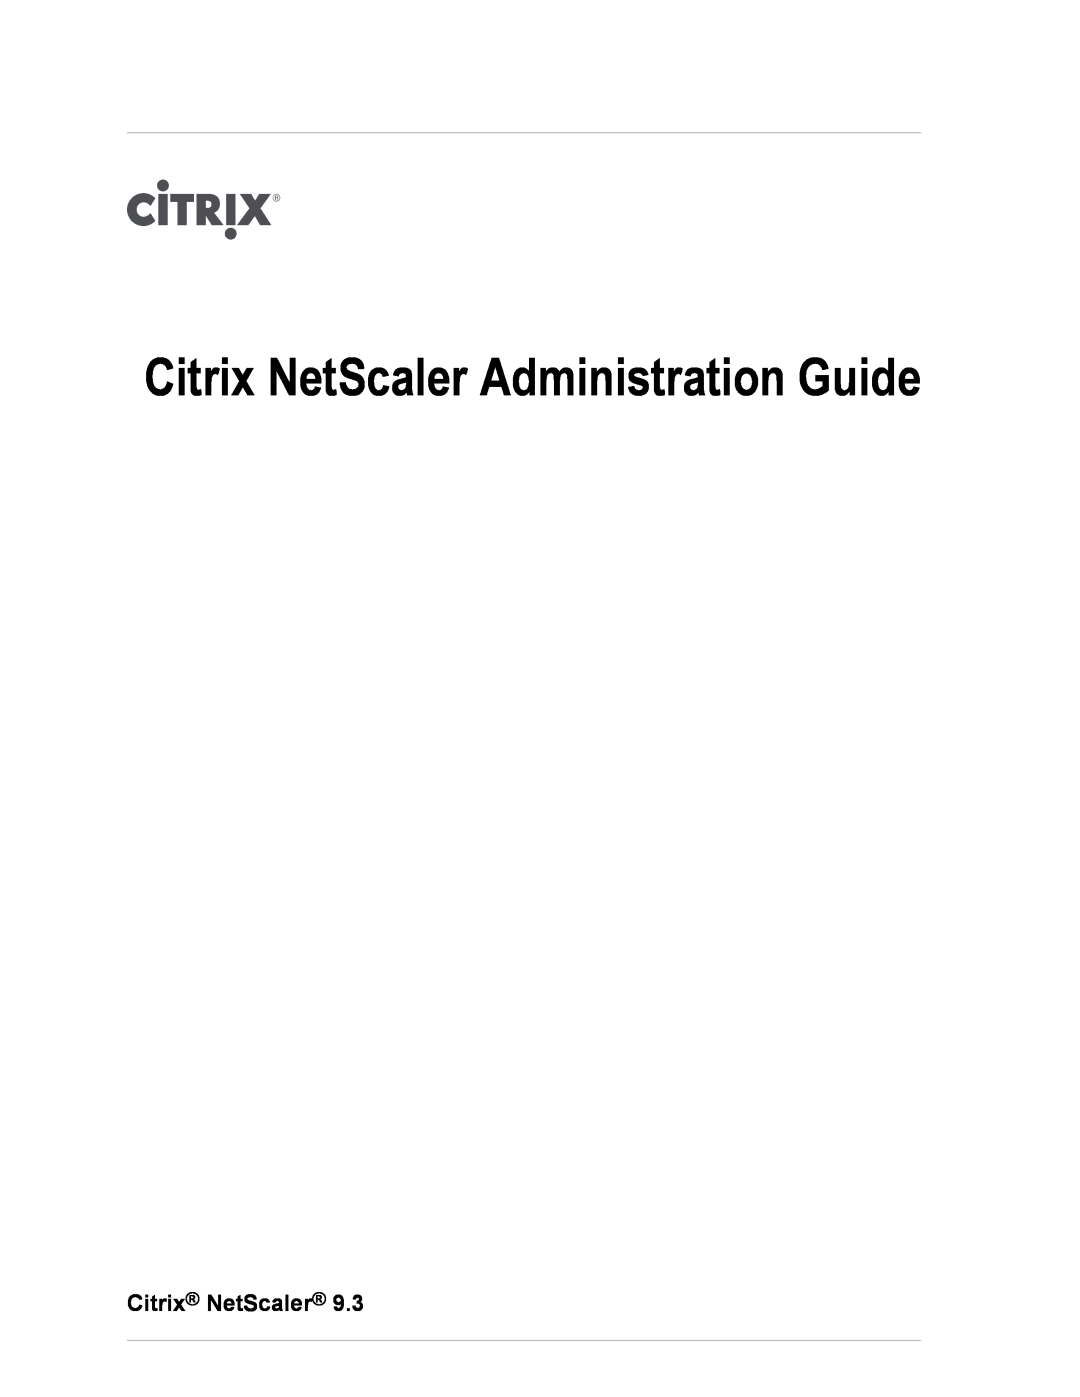 Citrix Systems CITRIX NETSCALER 9.3 manual Citrix NetScaler Administration Guide 